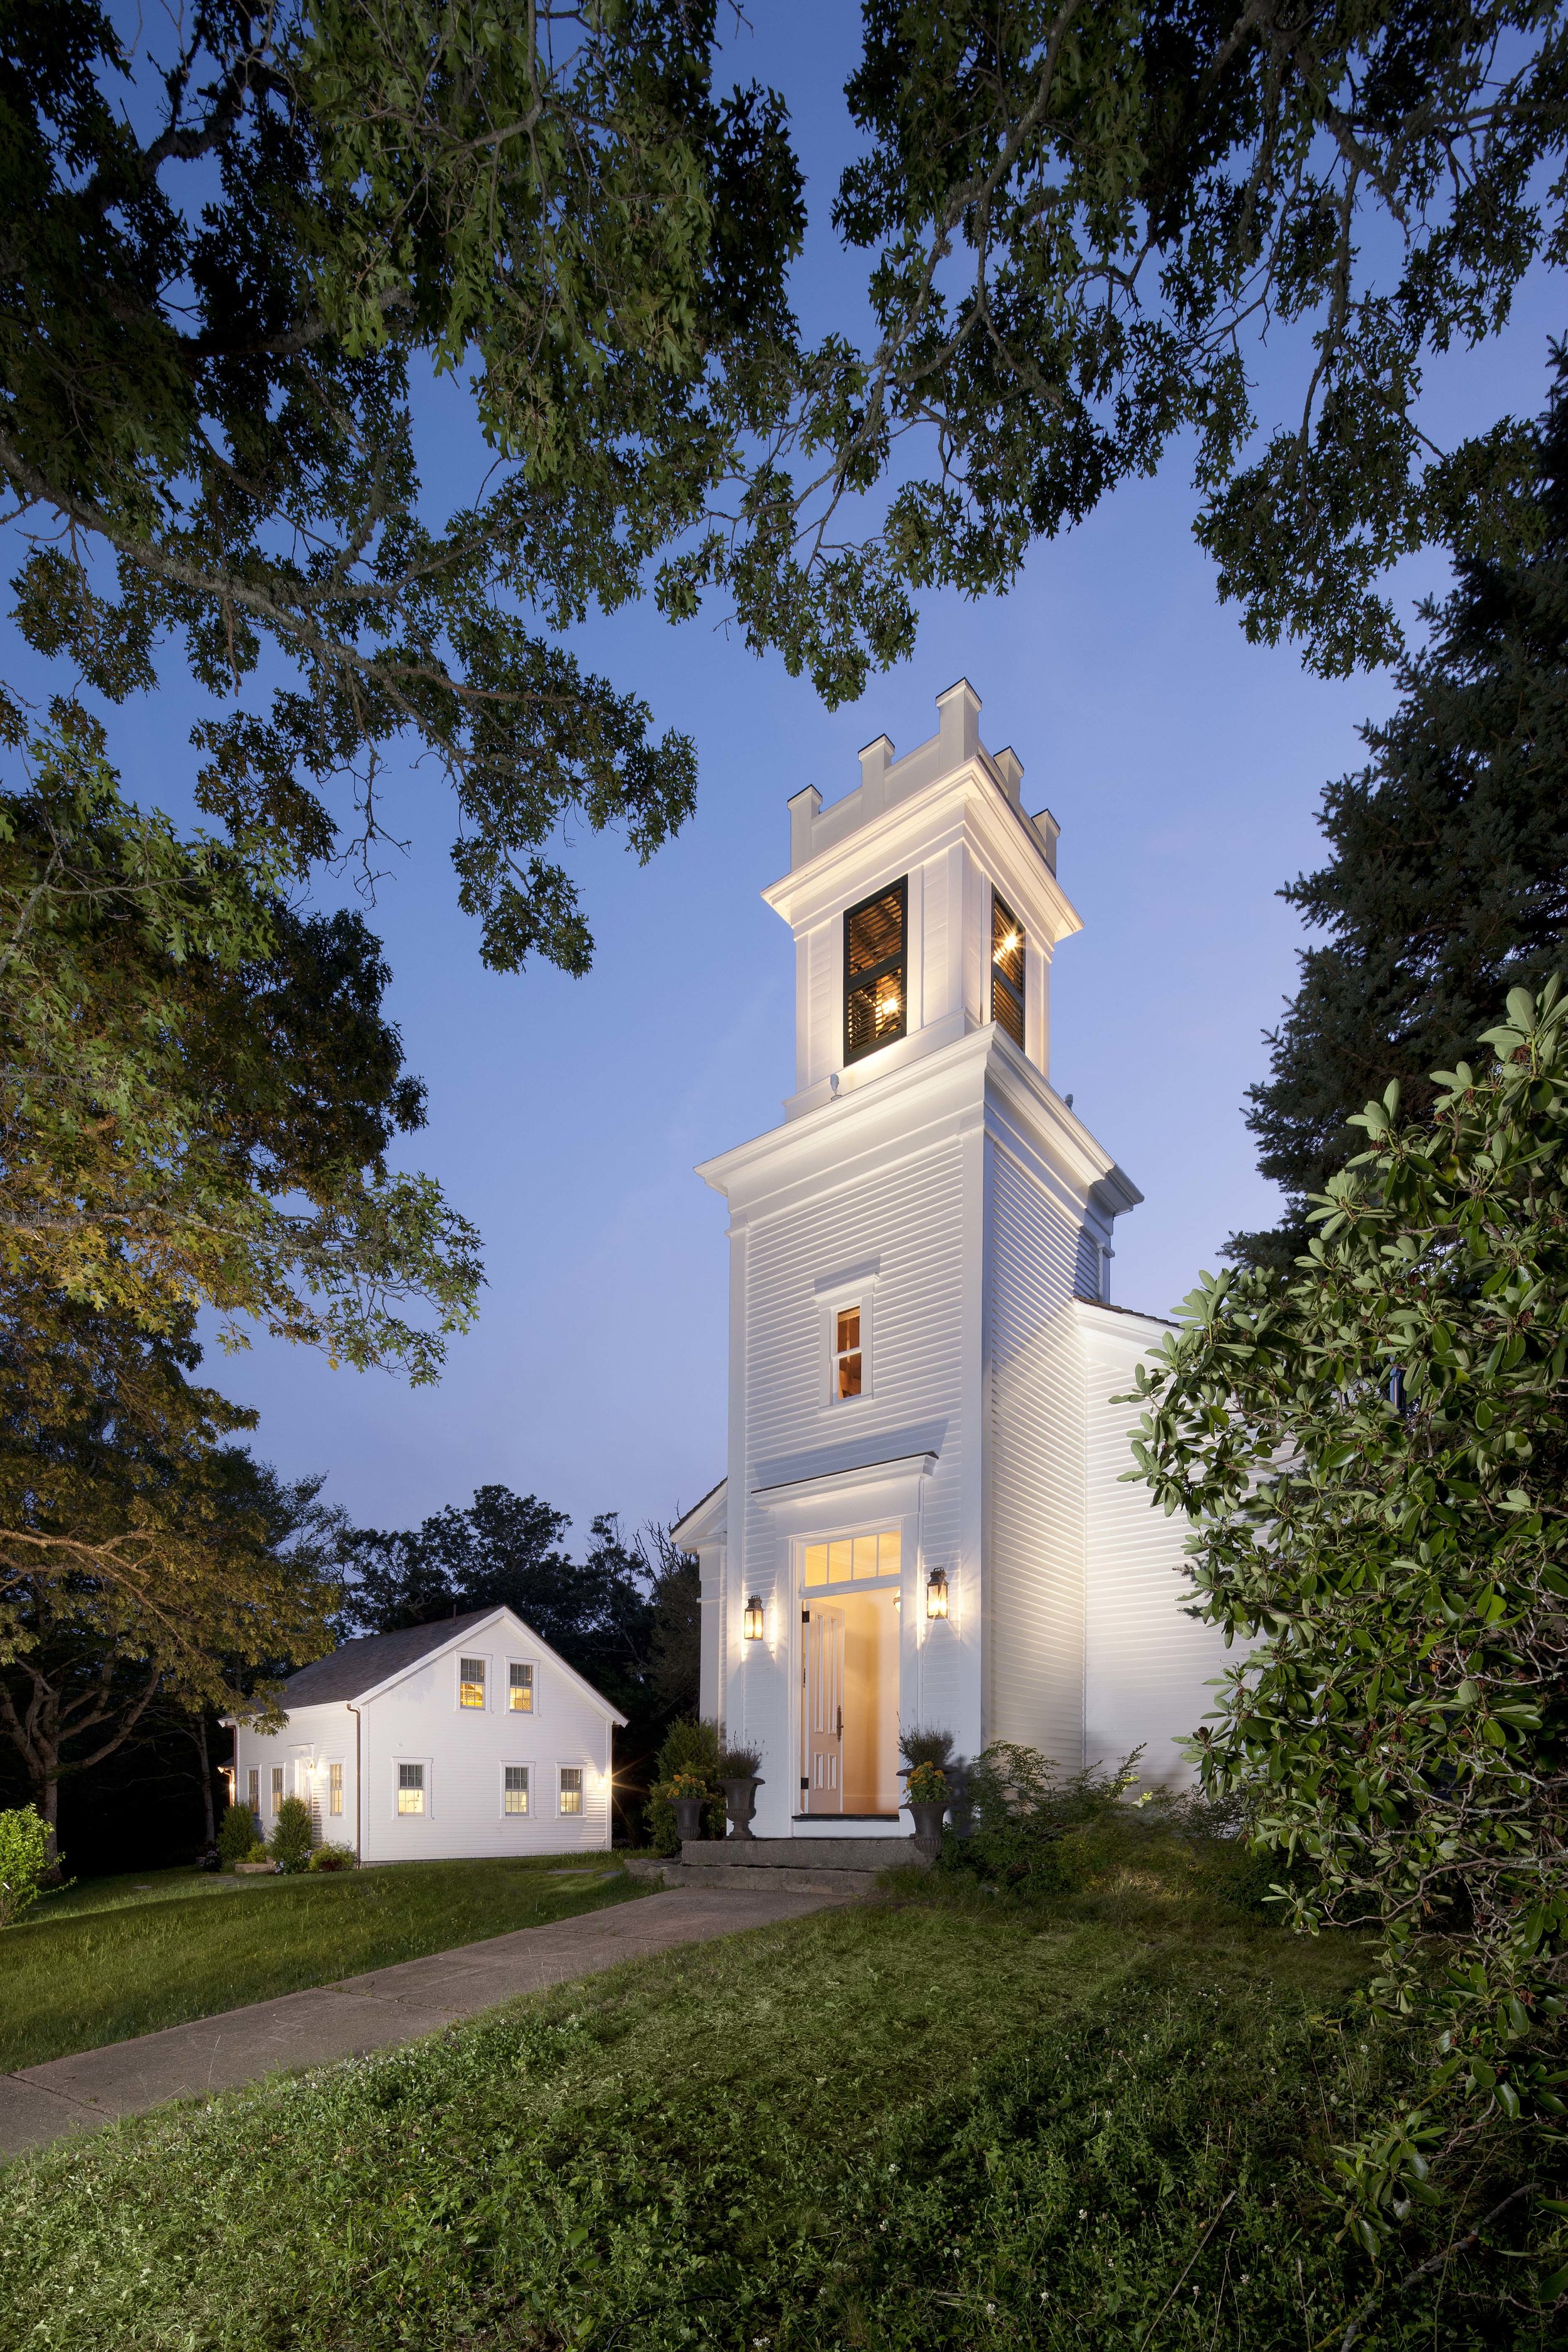  Historic 1840’s Church restoration, residential conversion. 